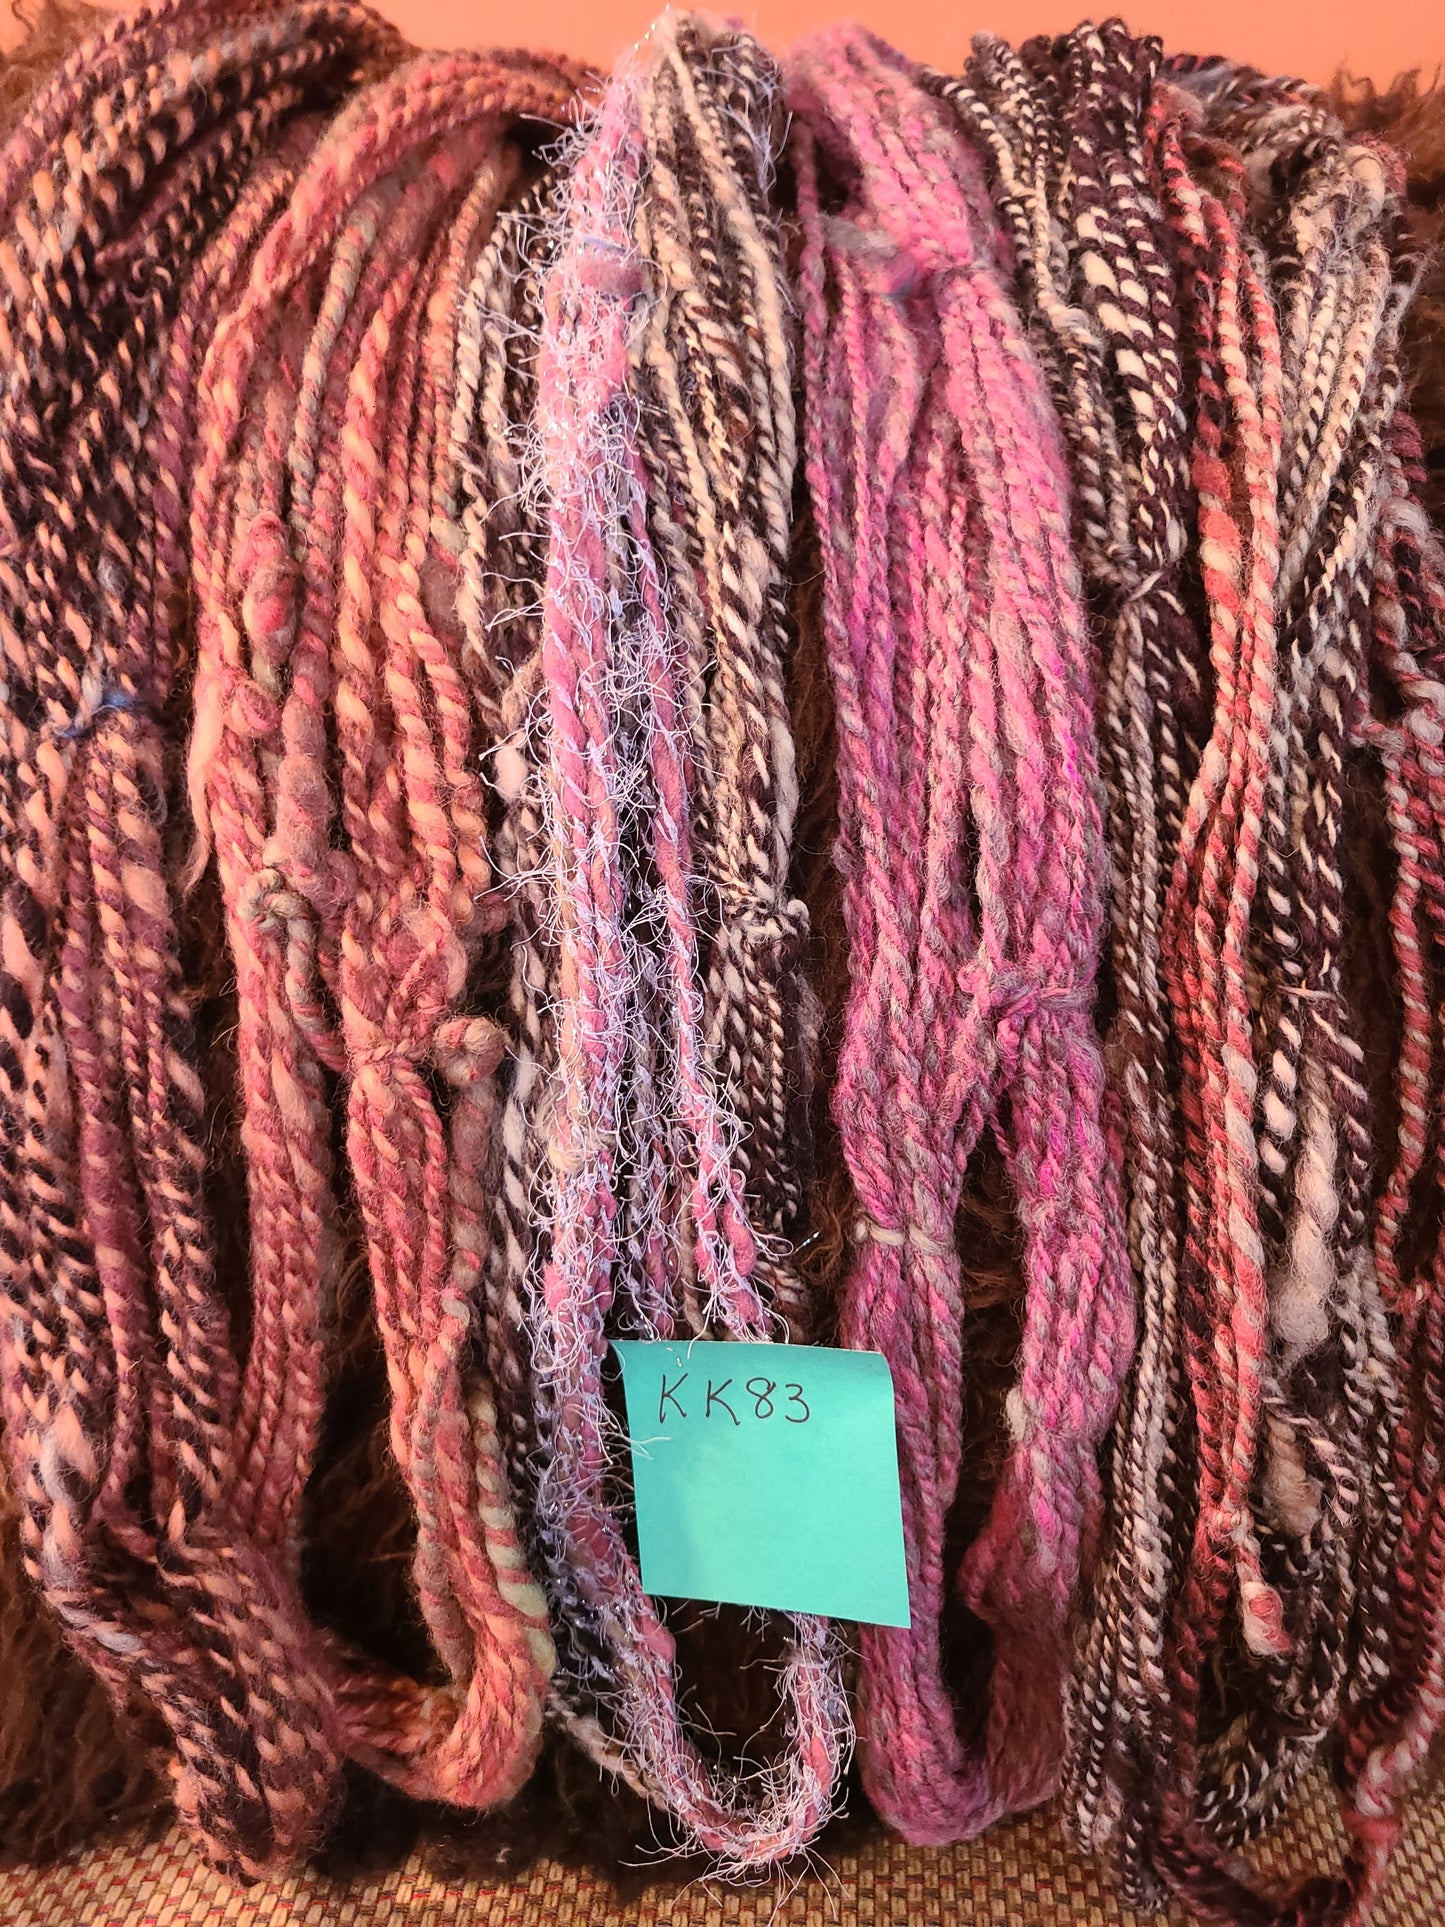 Yarn Handspun Knitters Knot- "Patchwork" Romney DK Weight KK83 2ply - 51yards & 4.8oz